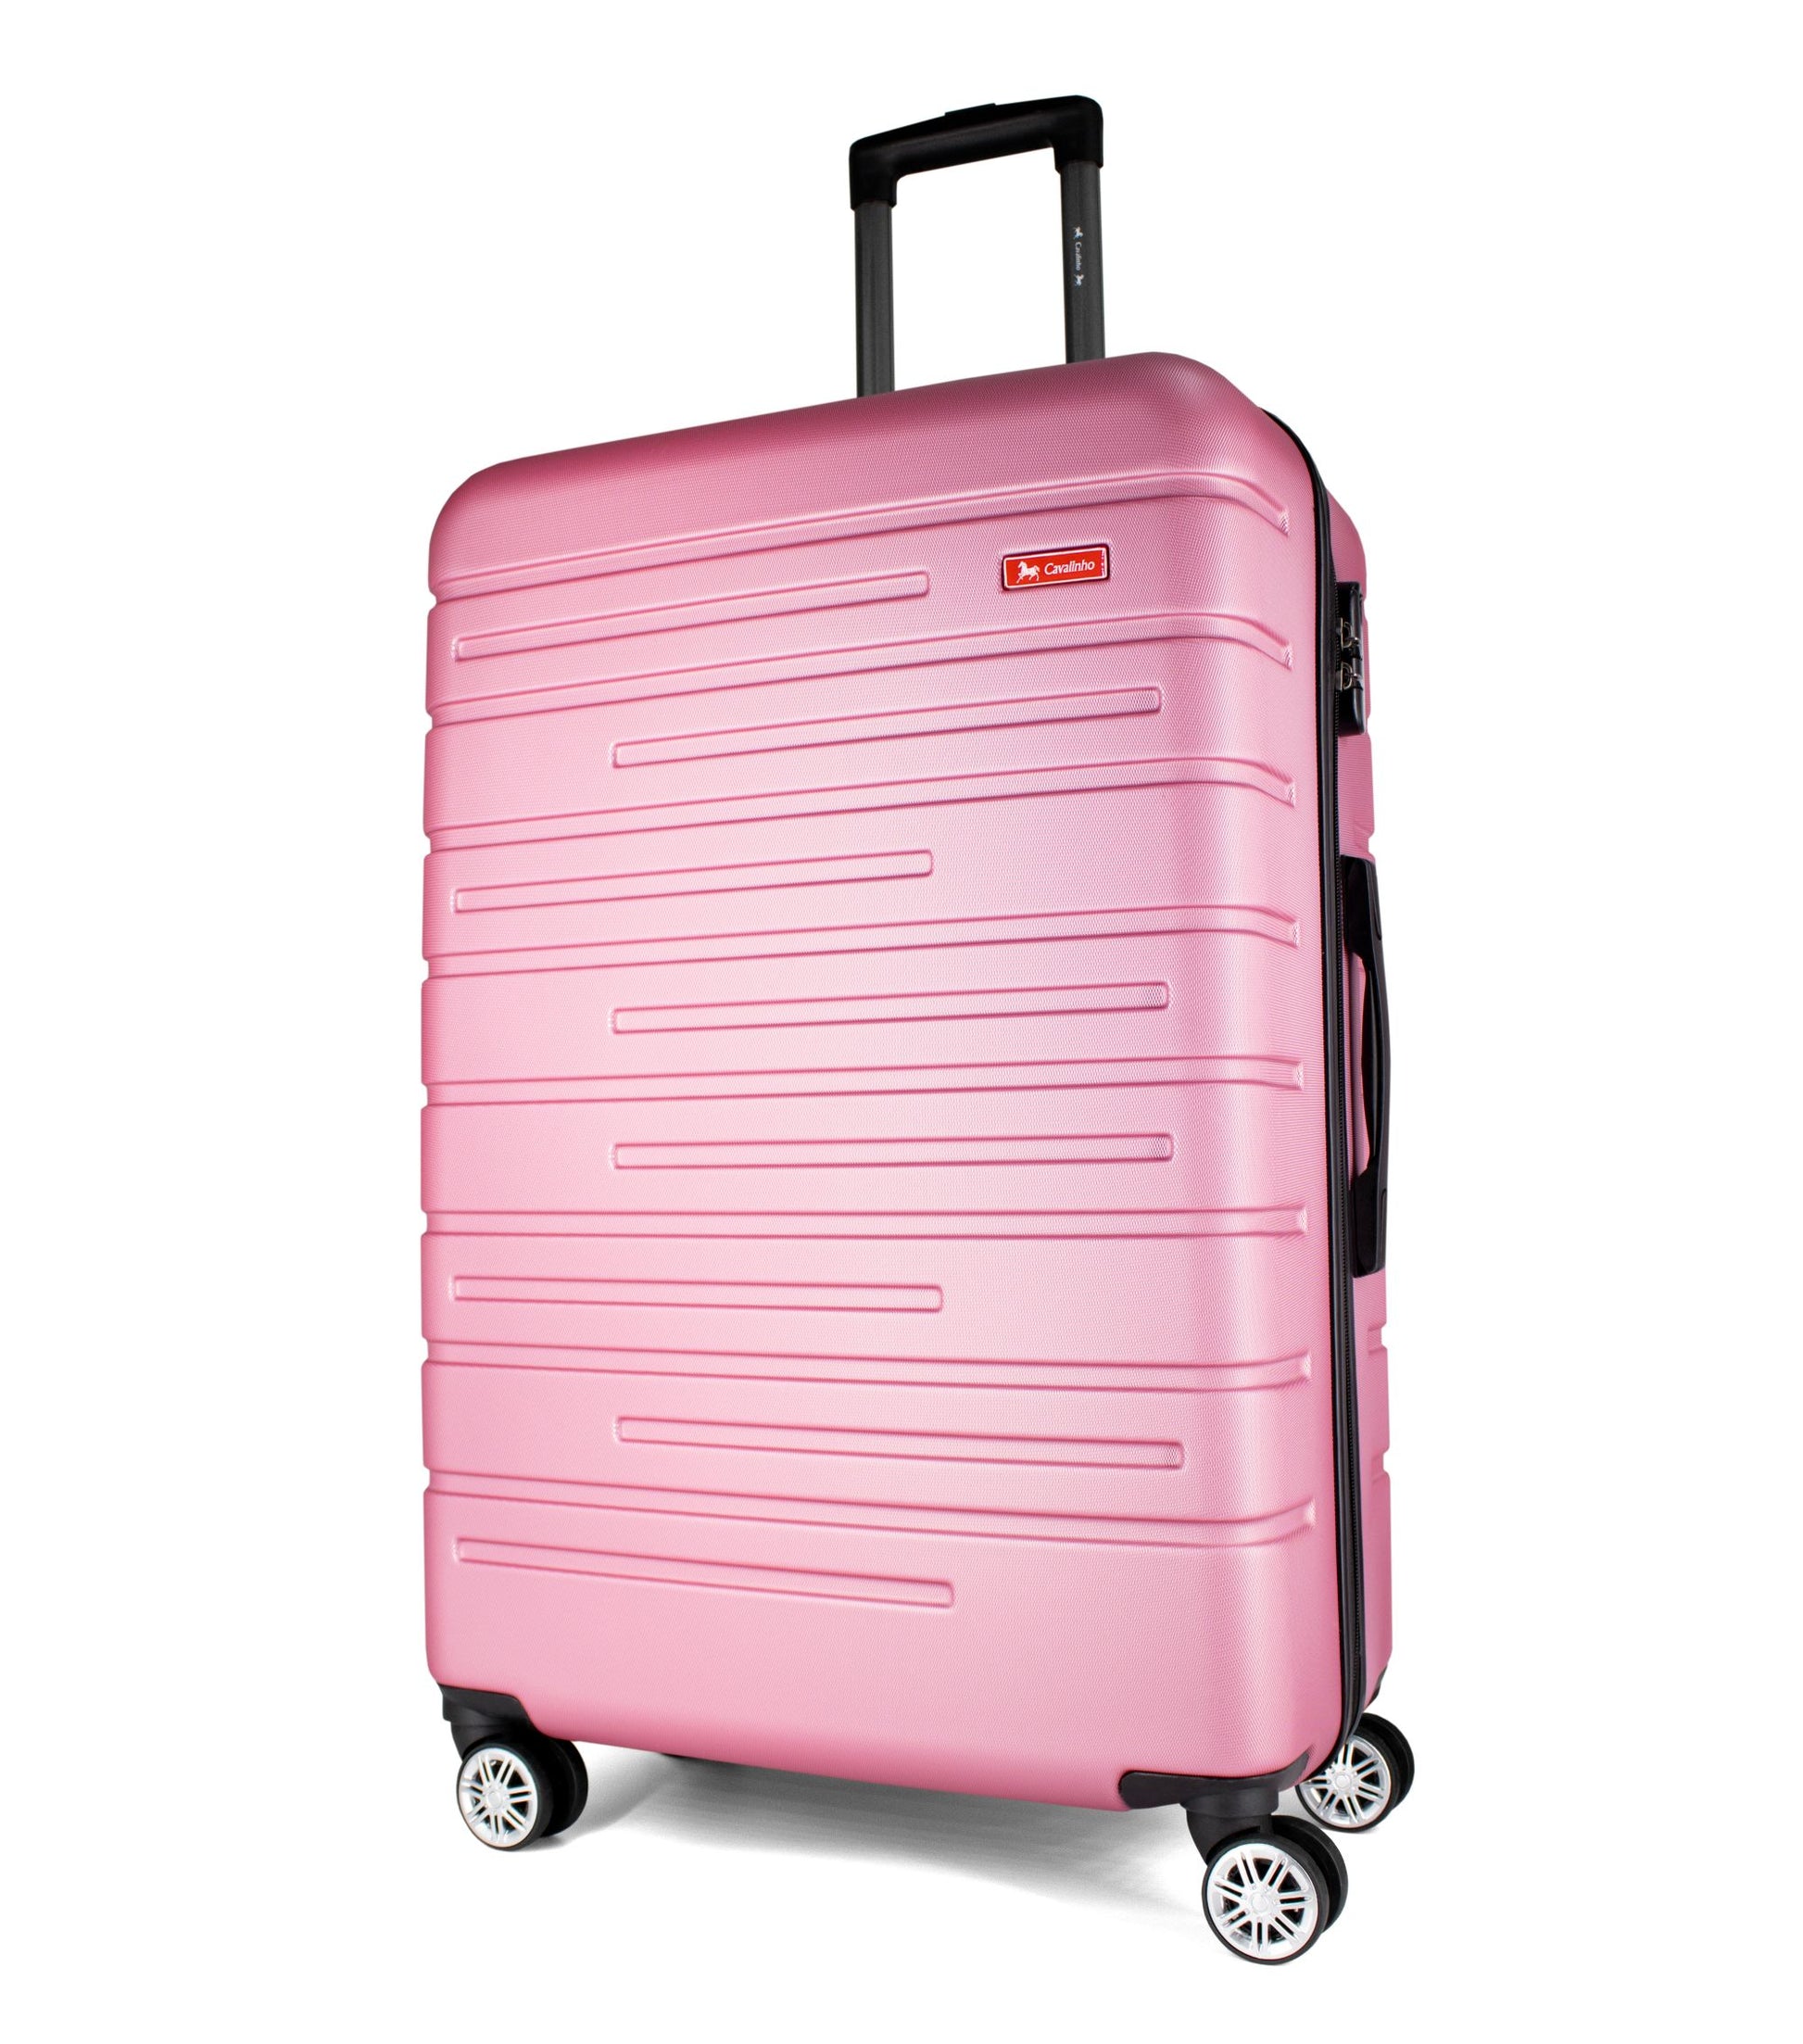 Cavalinho Bon Voyage Check-in Hardside Luggage (28") - 28 inch Pink - 68020005.18.28_2